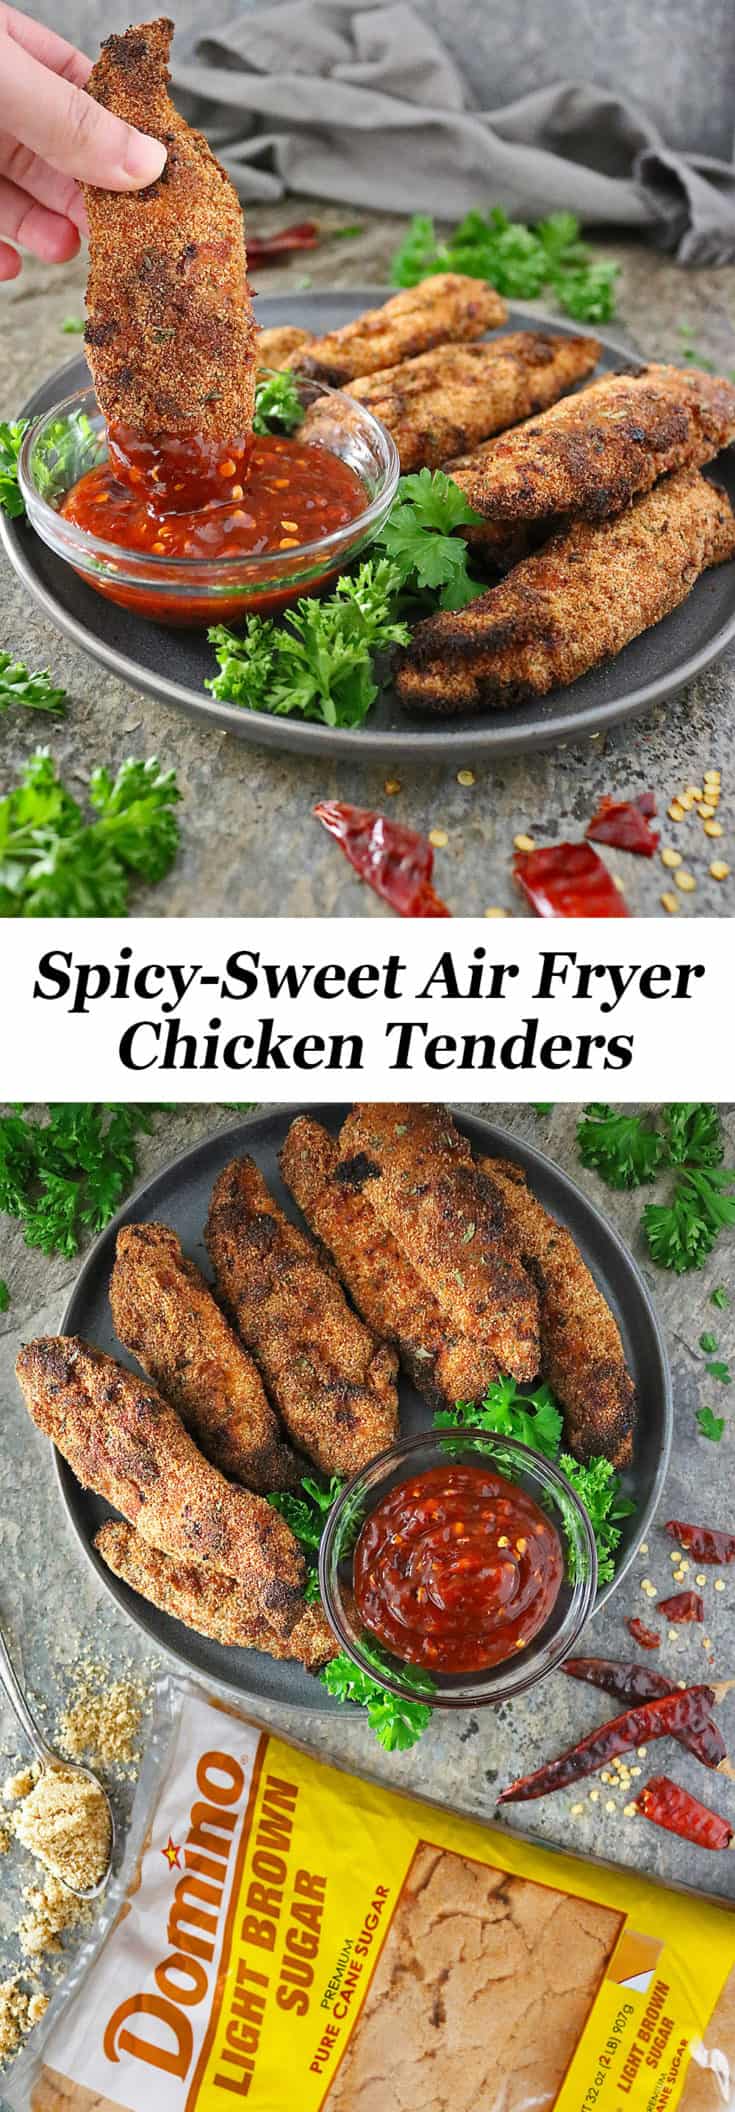 Spicy-Sweet Air Fryer Chicken Tenders Recipe - Savory Spin